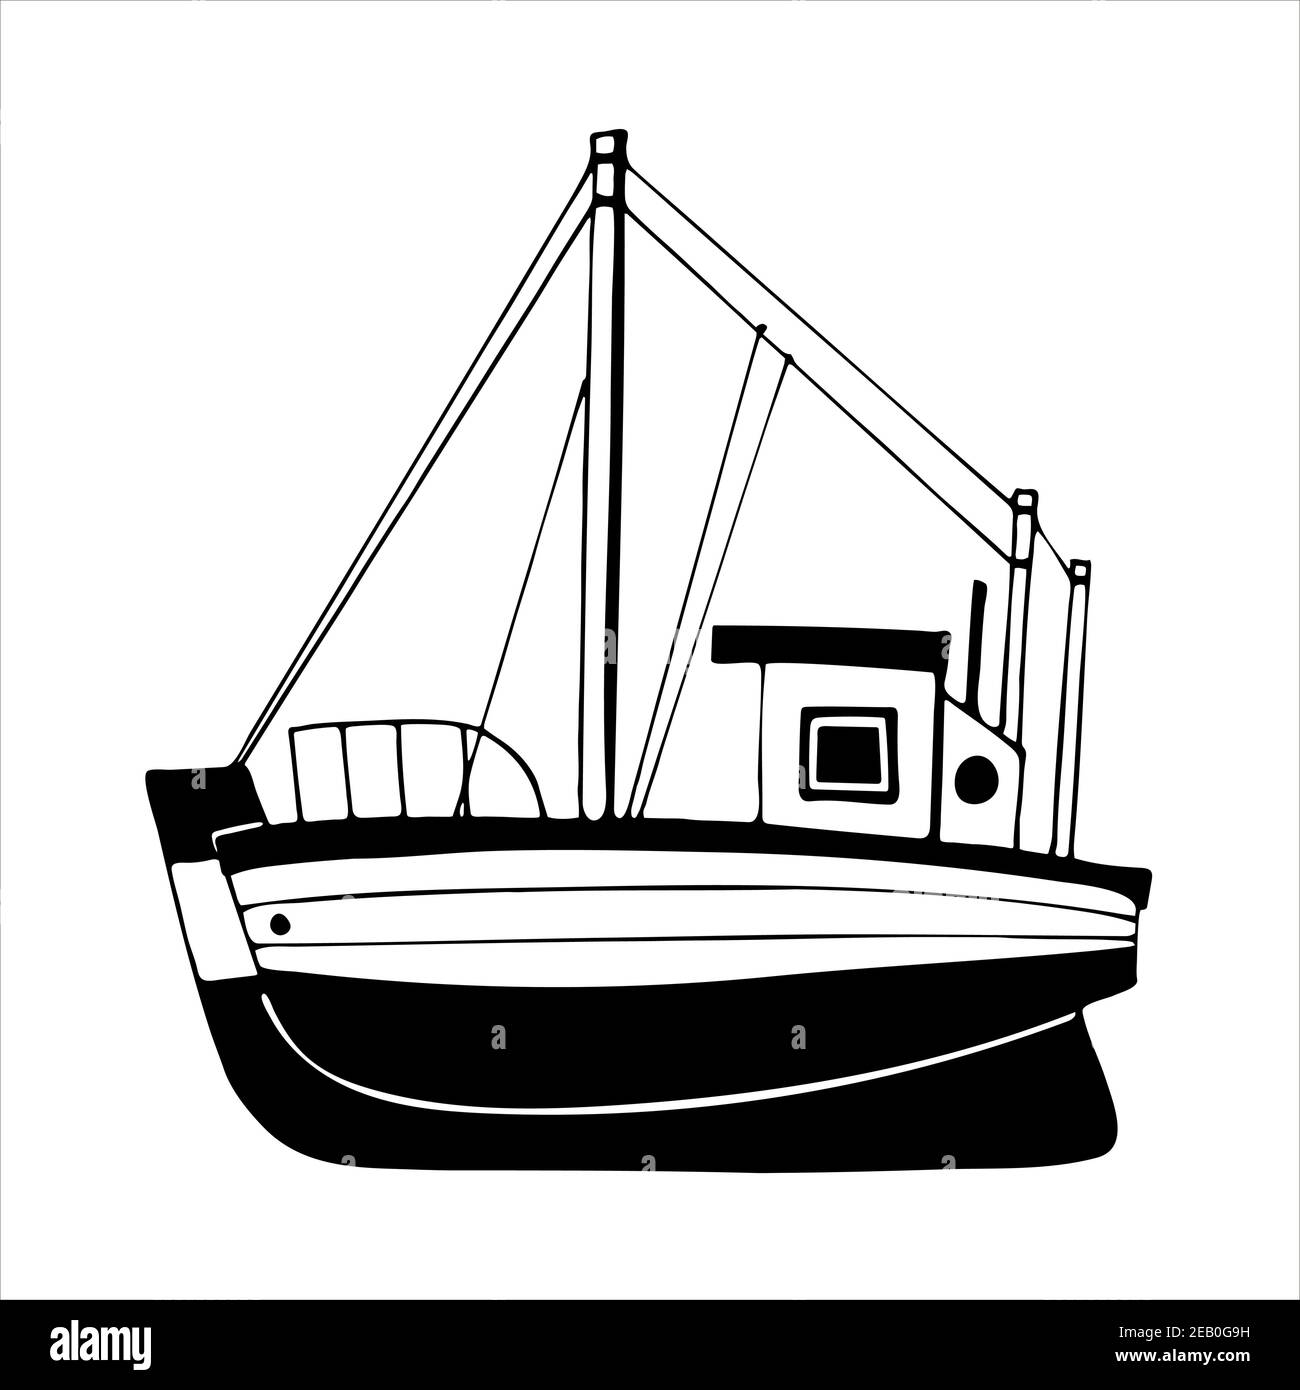 Fishing boat, hand drawn vector illustration Stock Vector